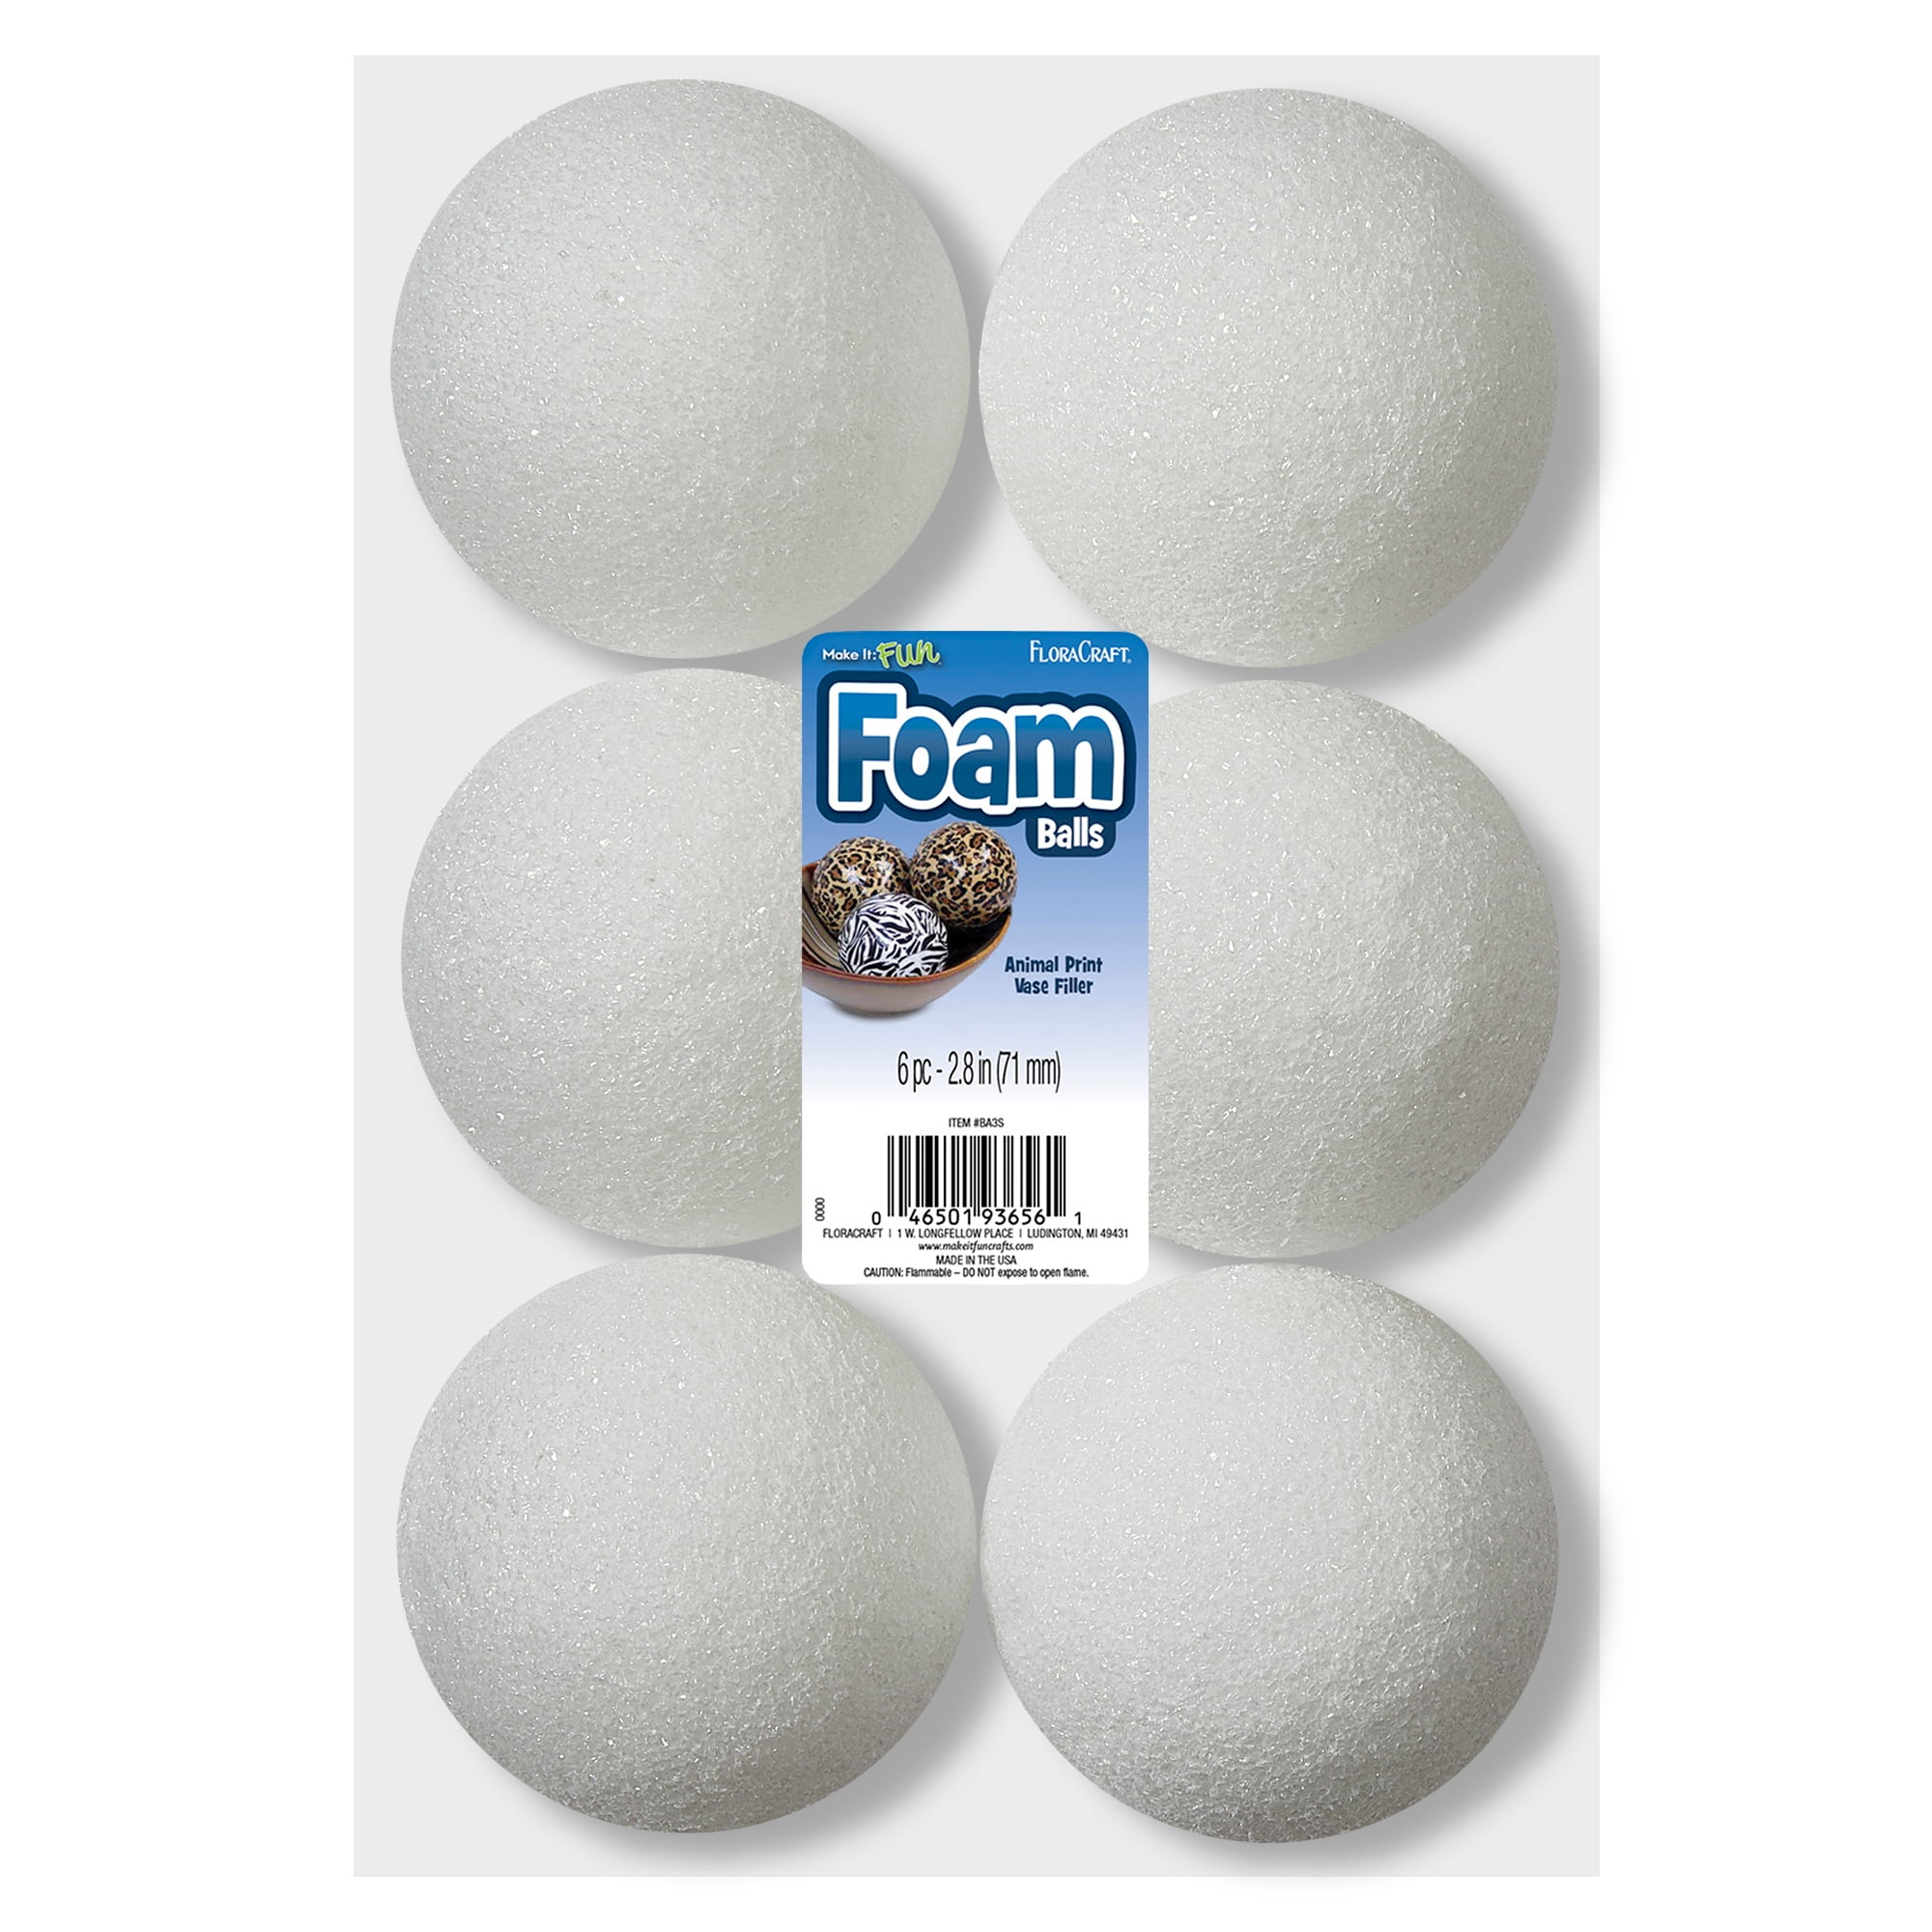 Zealor White Styrofoam Foam Balls 0.1-0.18 Inch for Slime Crafts Supplies  (Approx 40000 Foam Balls)